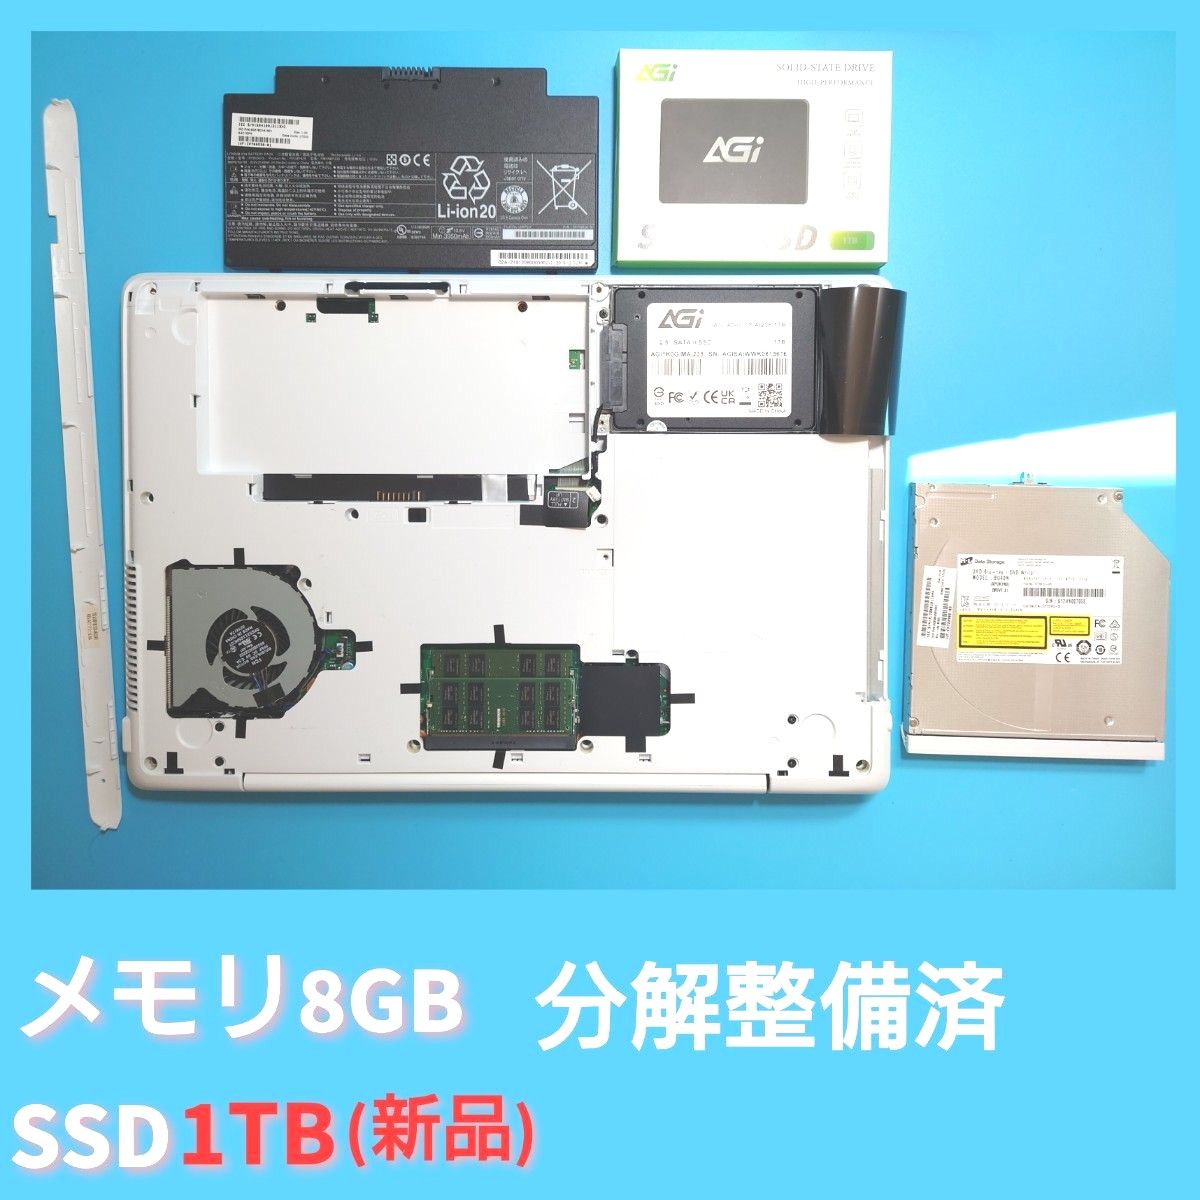 Fujitsu LIFEBOOK AH77/B1 Core i7 SSD 1TB Windows11 Office2021